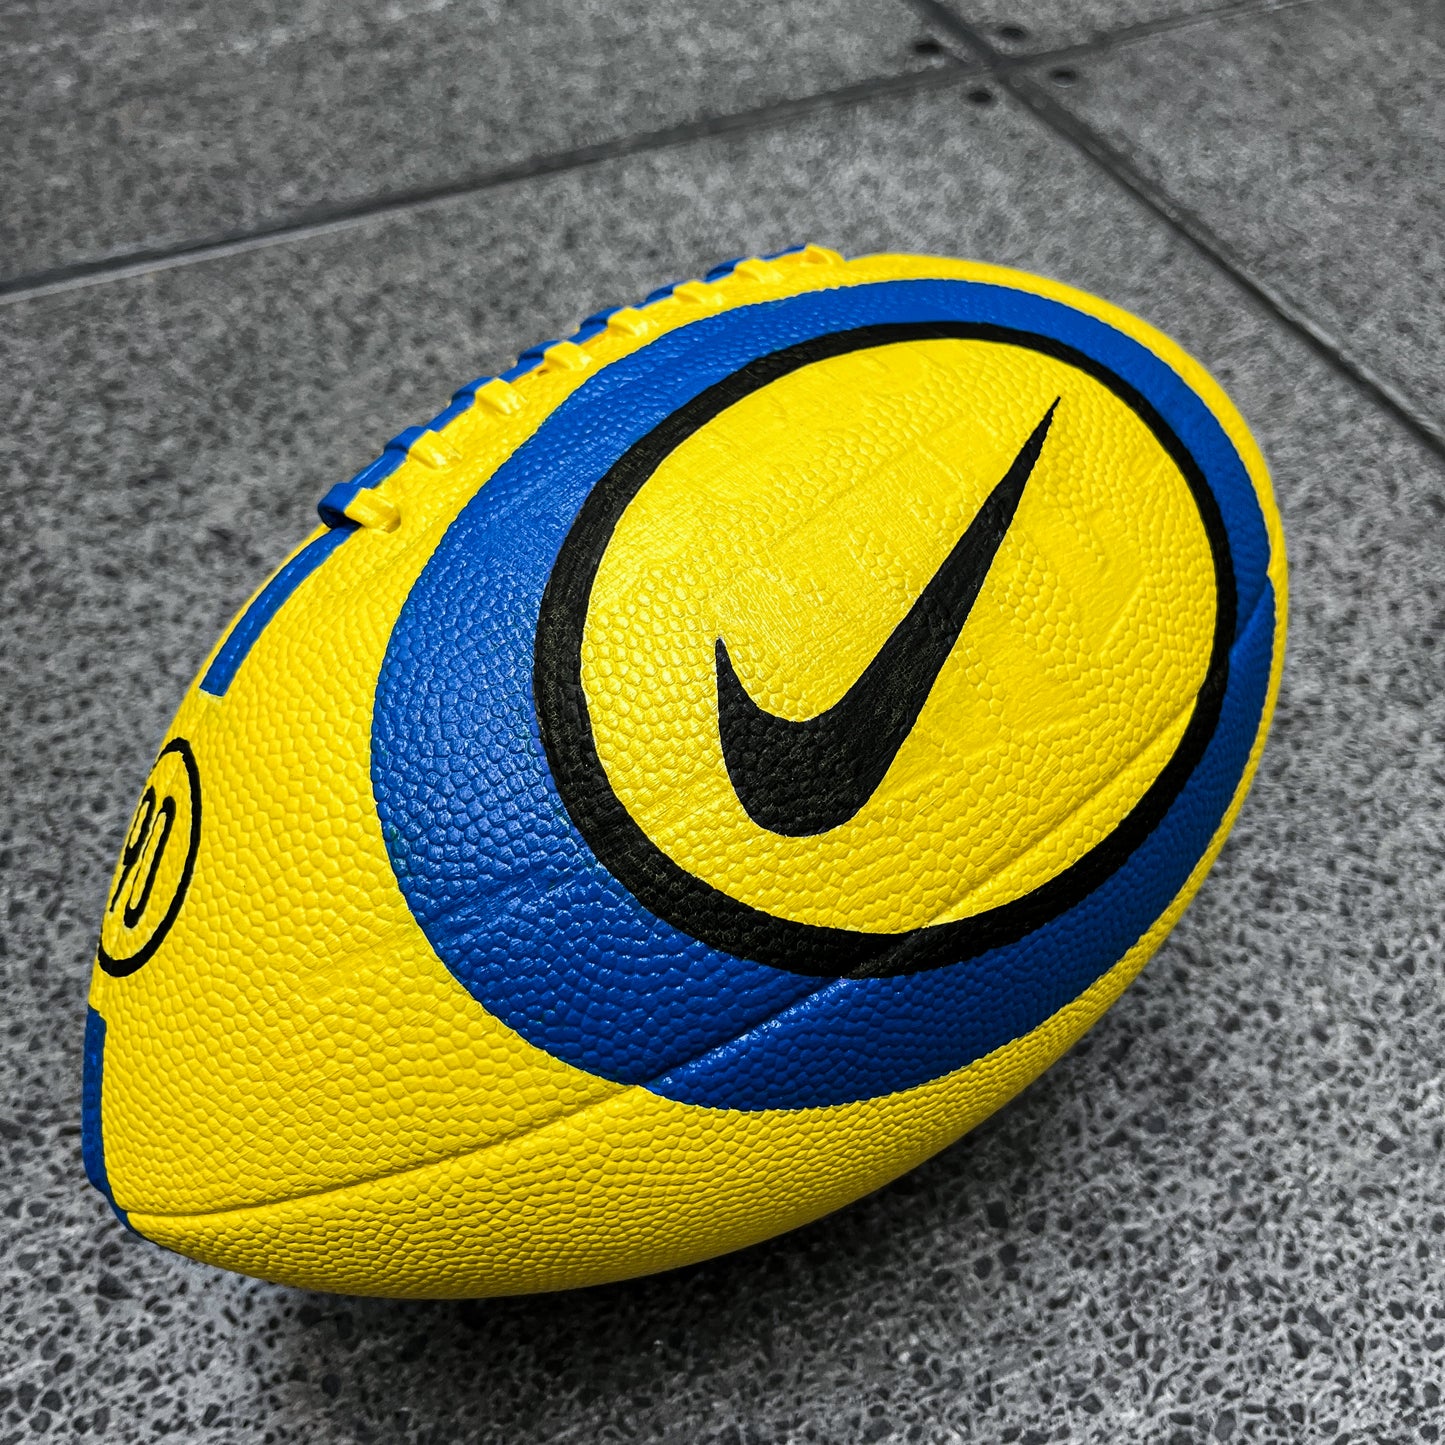 Hand-painted Nike Total90 Aerow Football Football